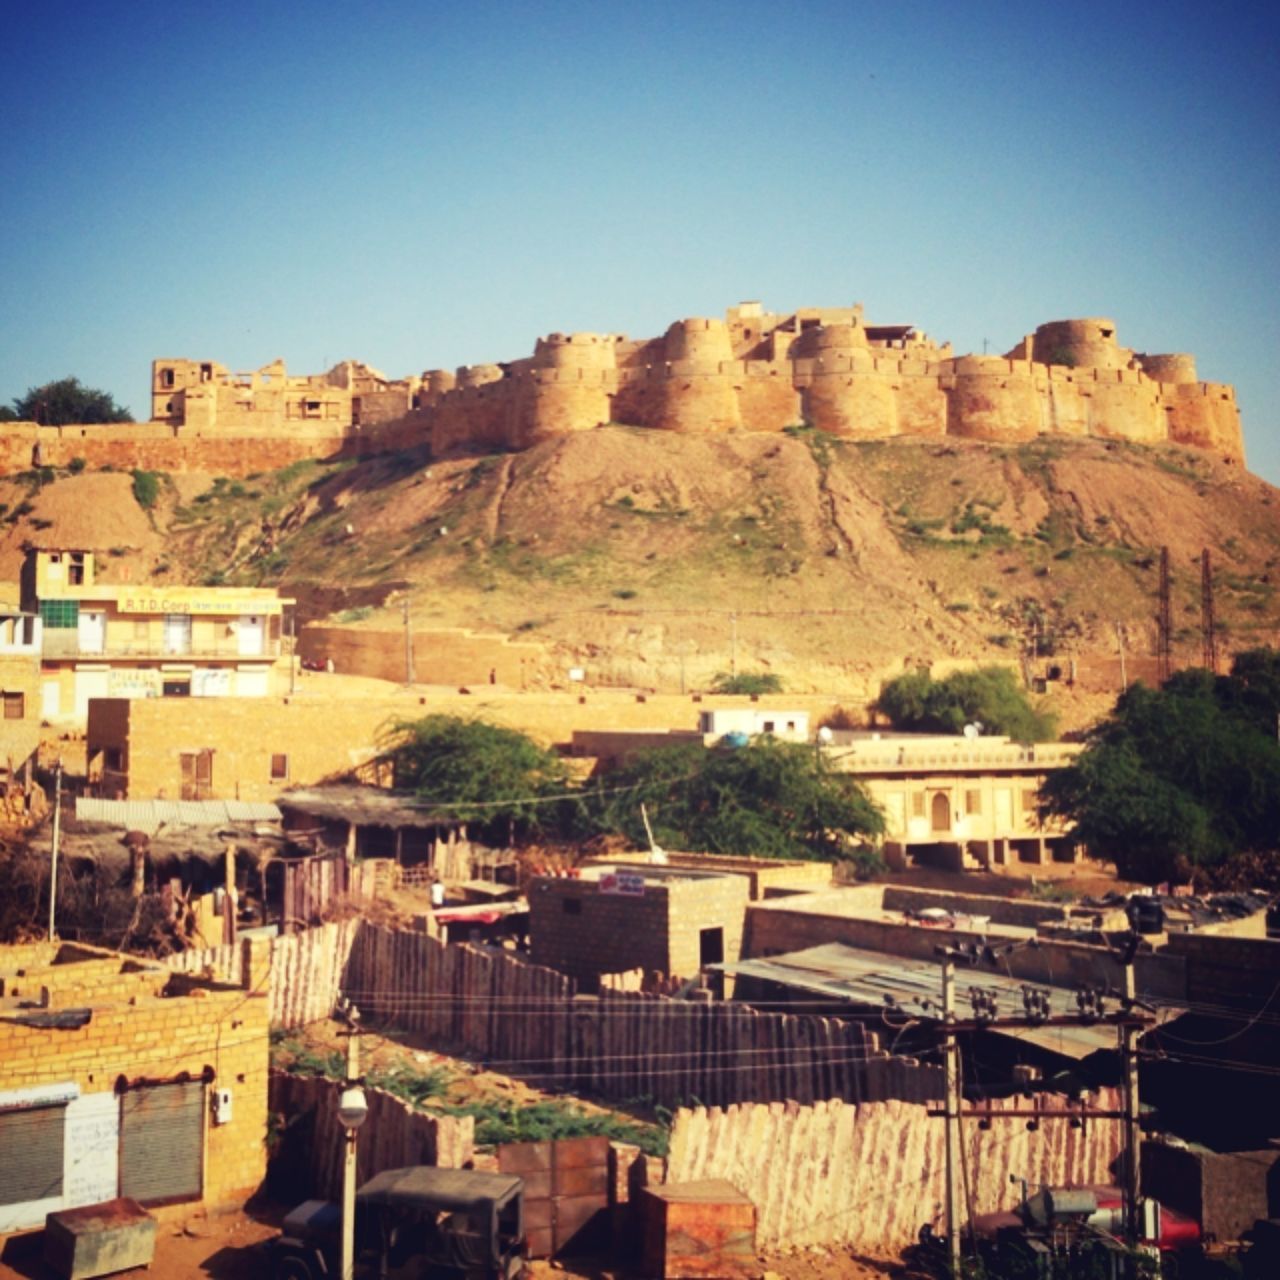 Jaisalmer: The Golden City